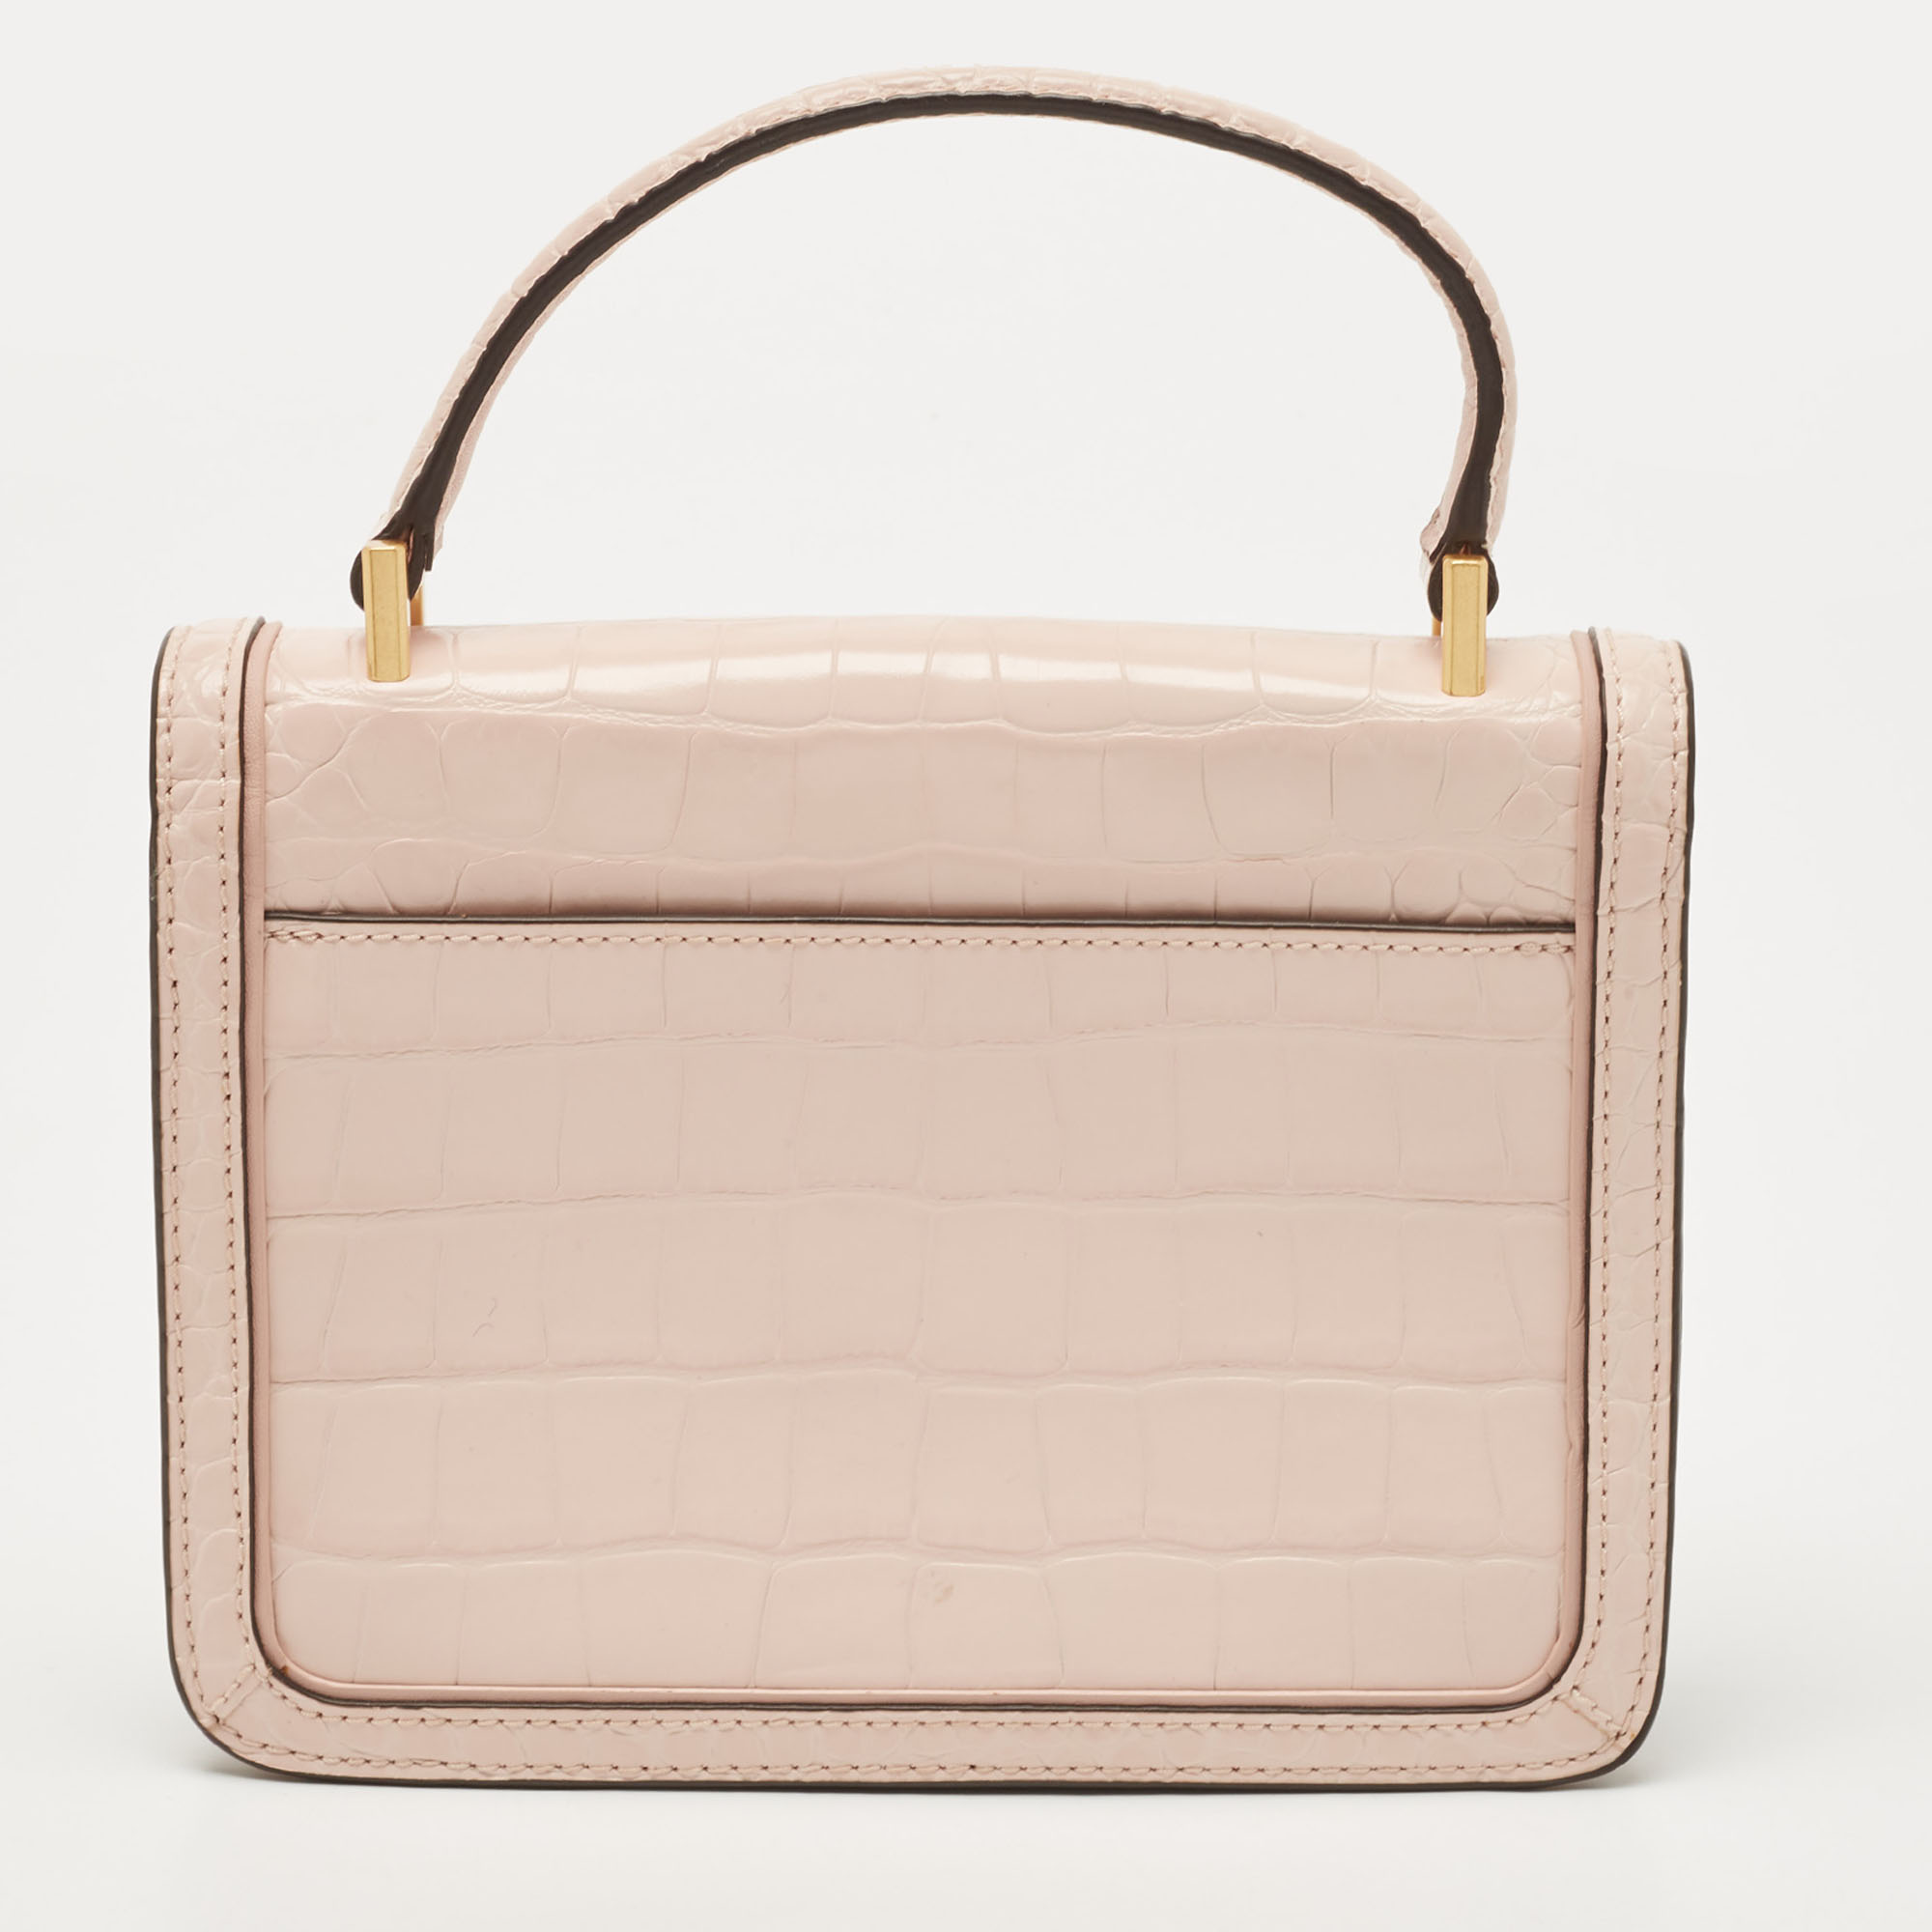 Tory Burch Pink Croc Embossed Leather Mini Juliette Top Handle Bag